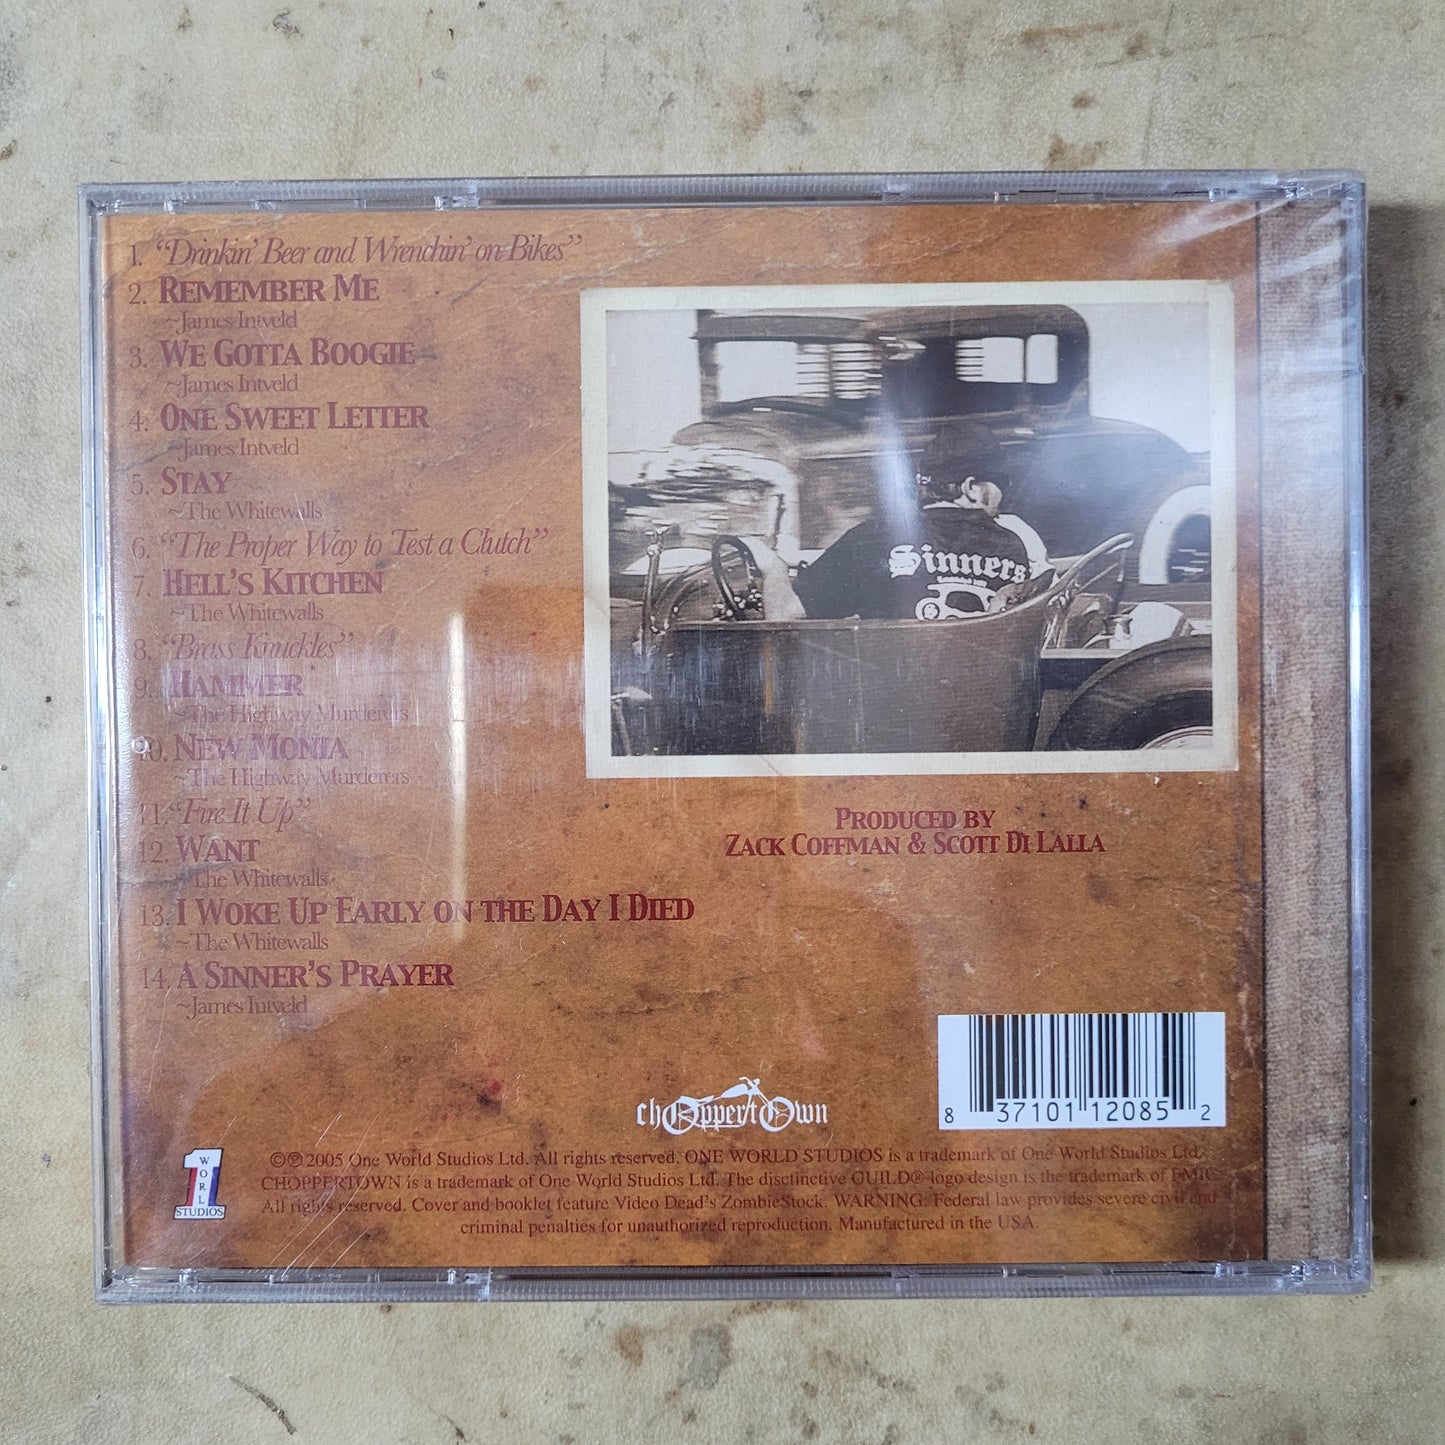 CD bo soundtrack Choppertown "The Sinners"